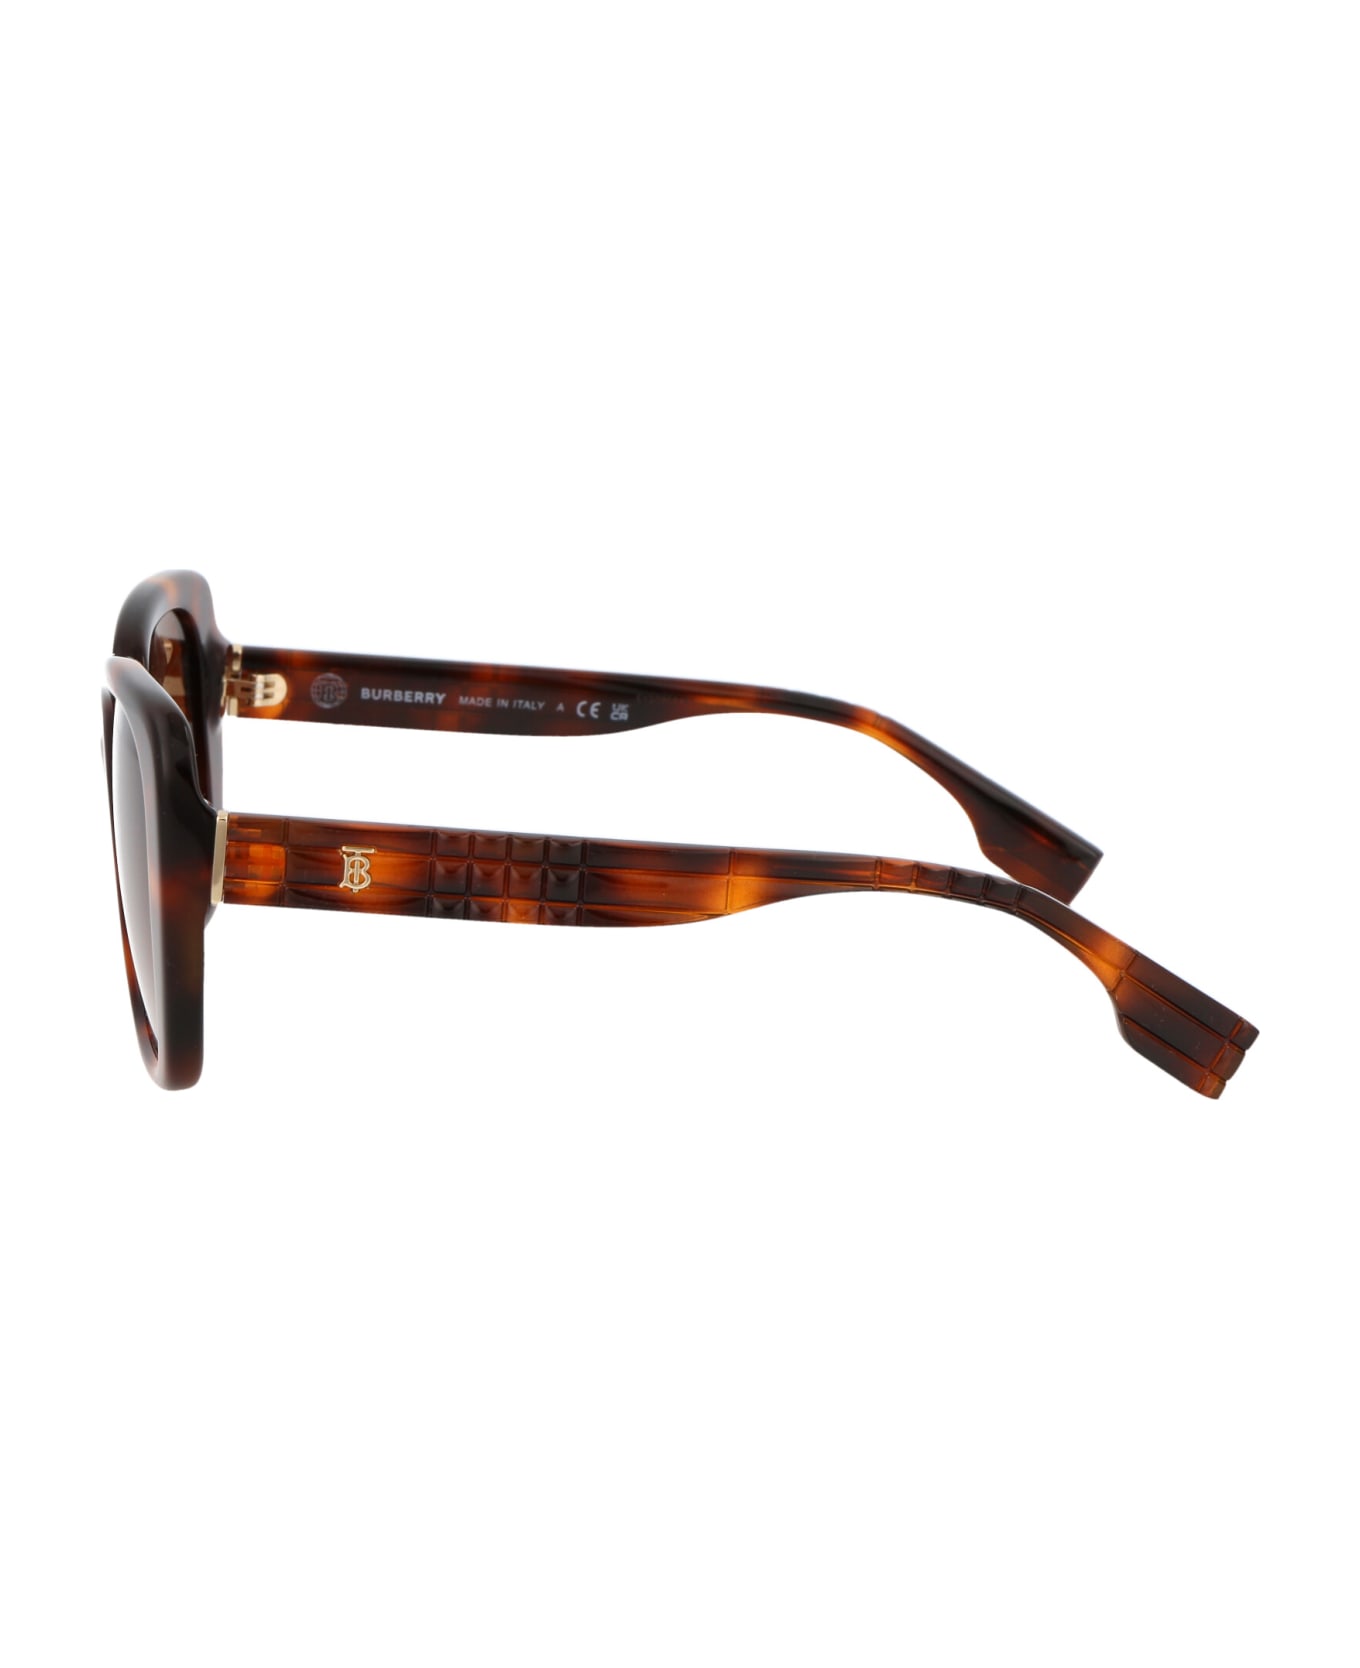 Burberry Eyewear Helena Sunglasses - 331613 LIGHT HAVANA サングラス